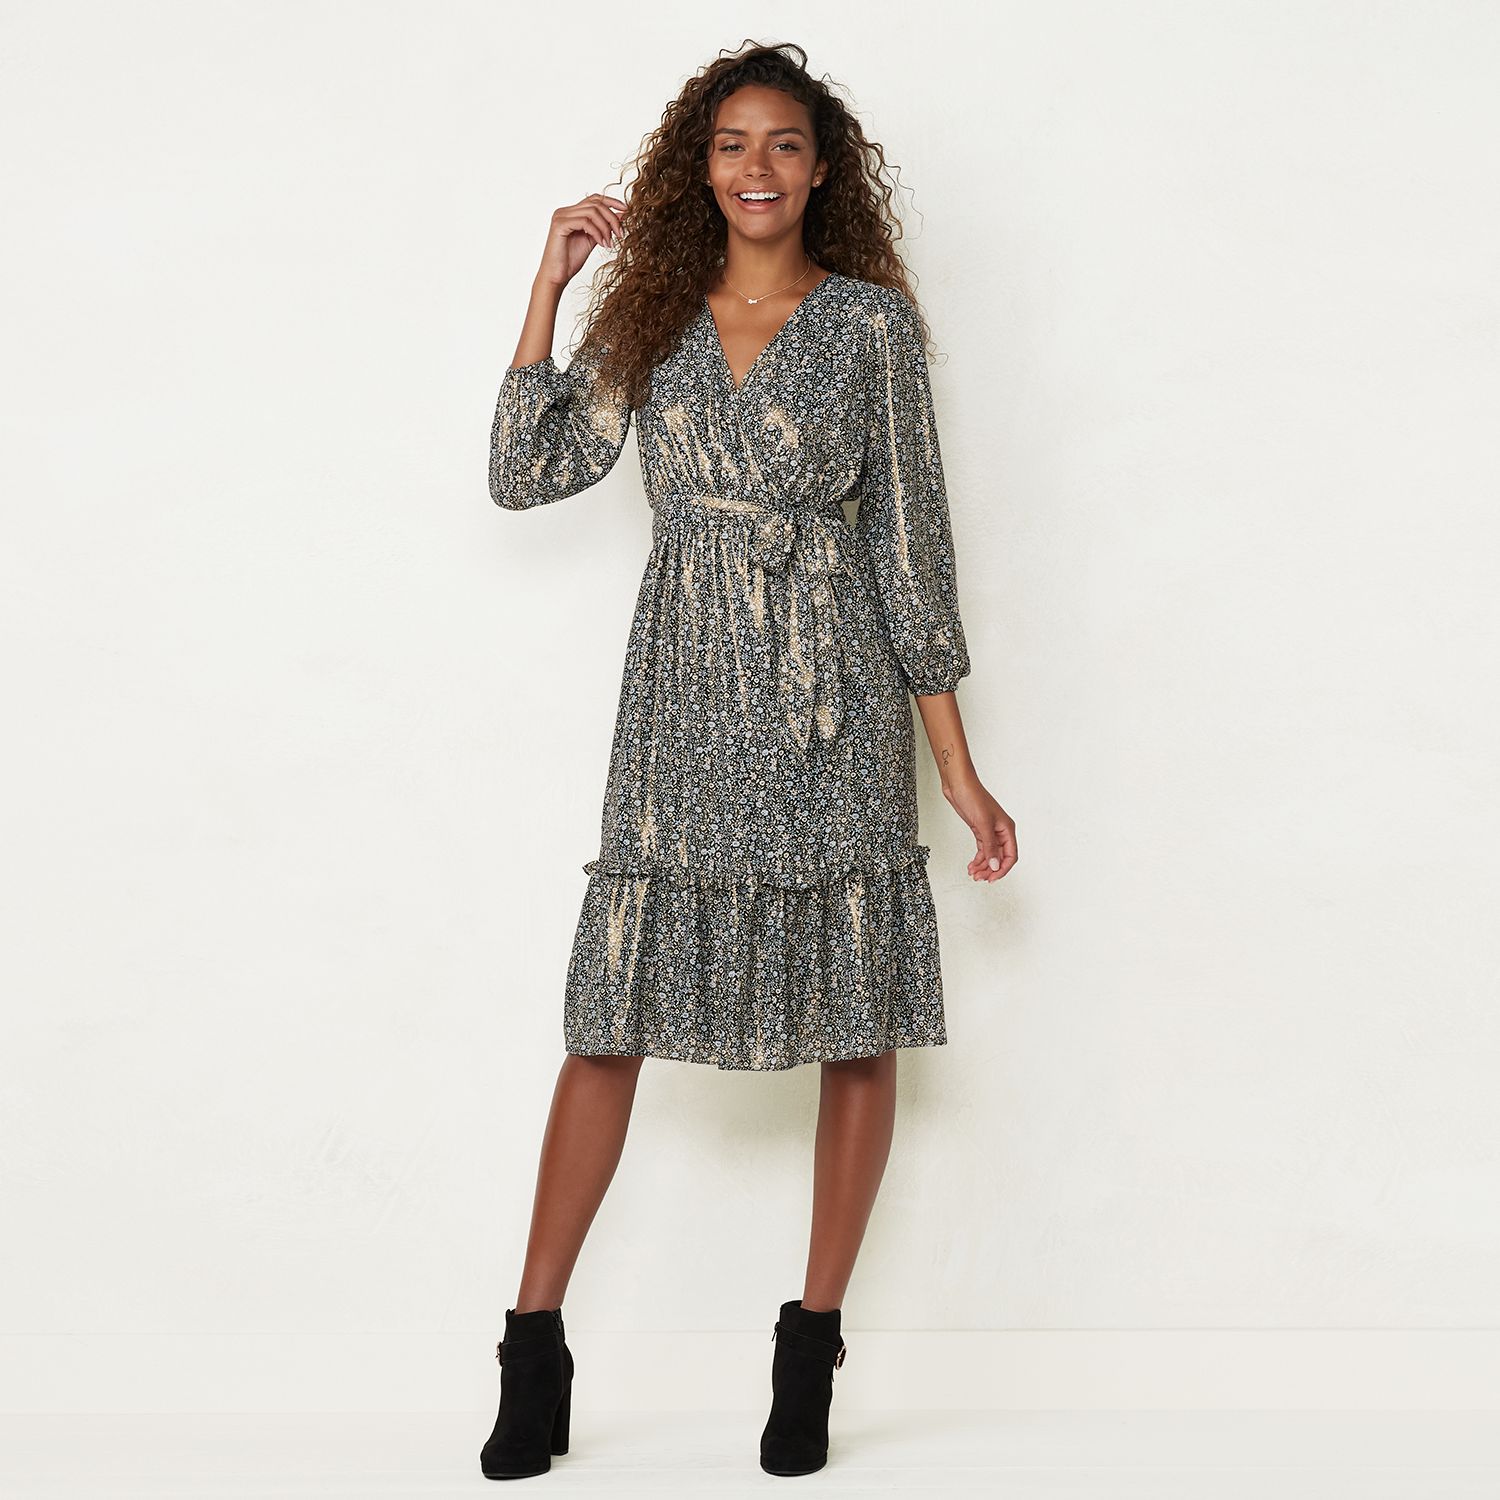 Shop Wrap Dresses for Women | Kohl's